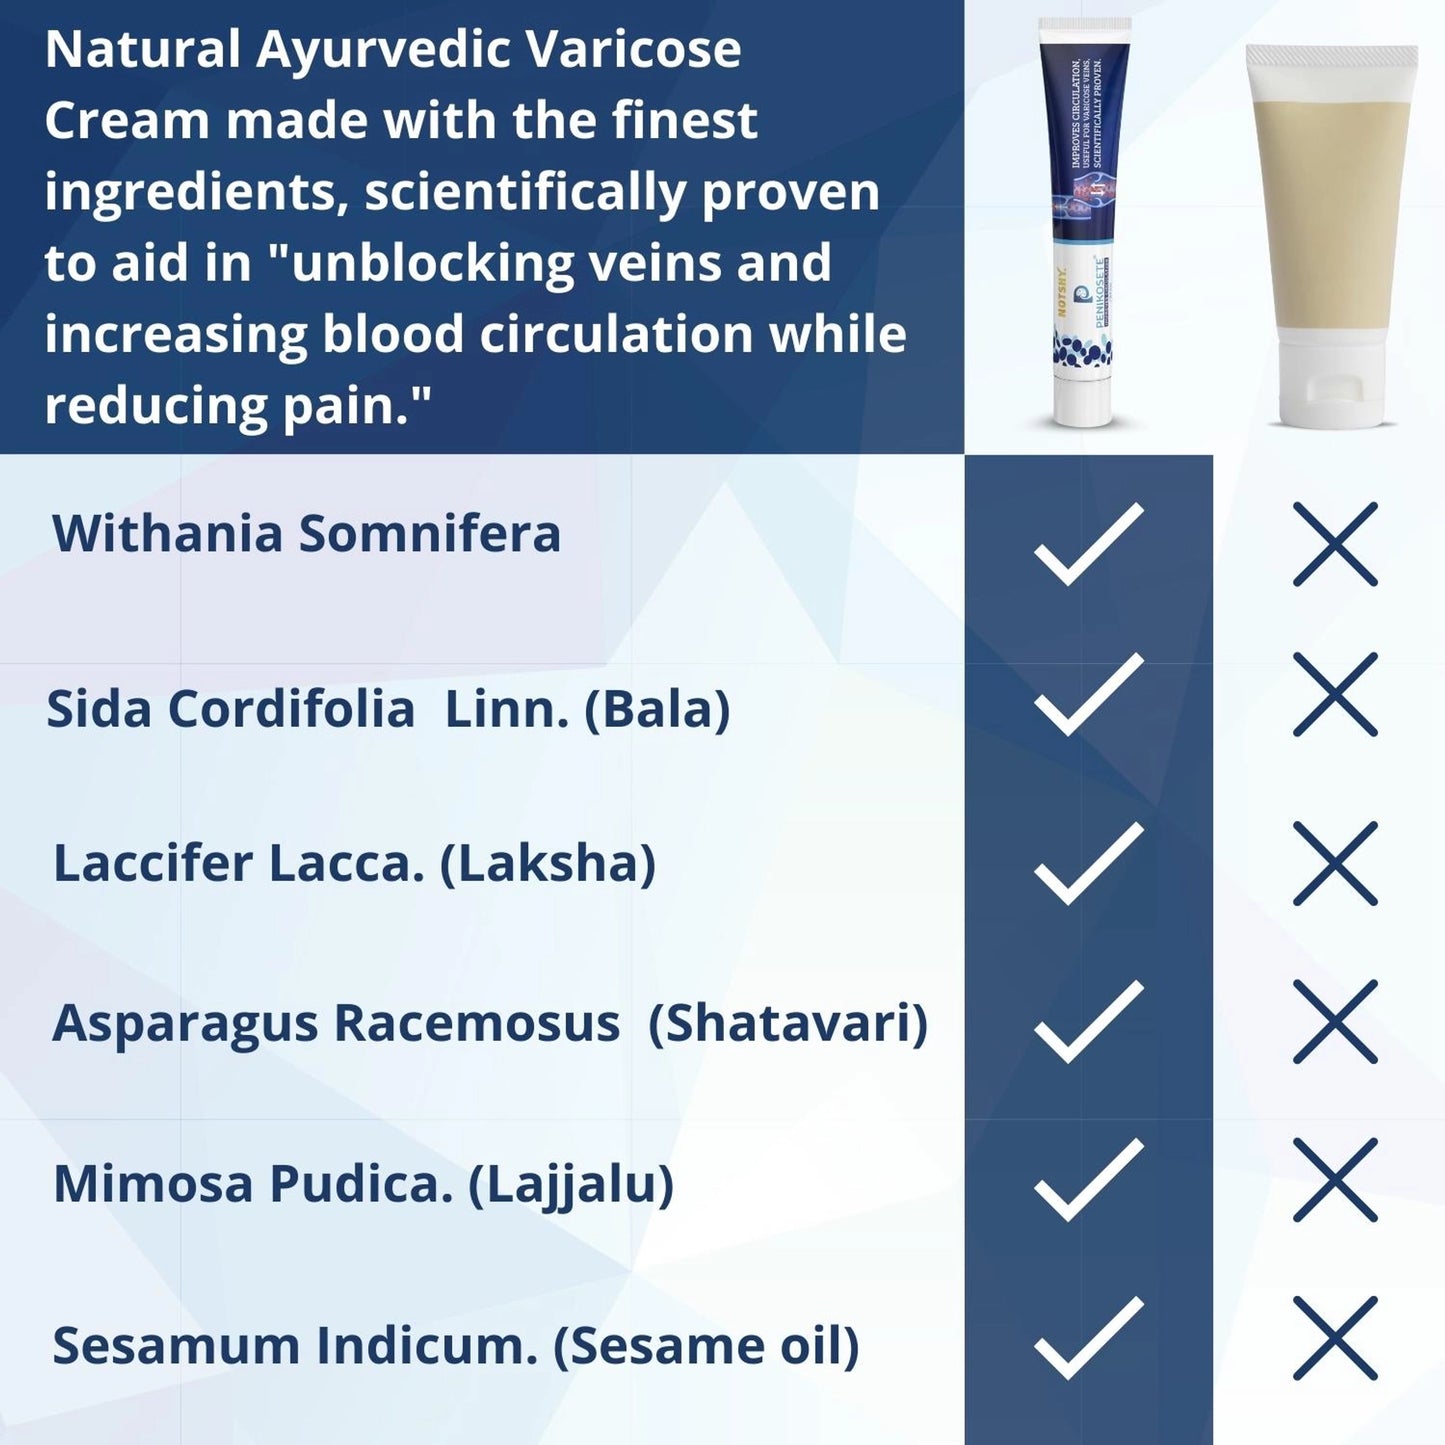 PENIKOSETE Ayurvedic Cream  |Natural Solution for Management of Varicose Veins, Spider Veins & Varicocele |  Buy 1 or Special Deal 2+1 FREE Pack |